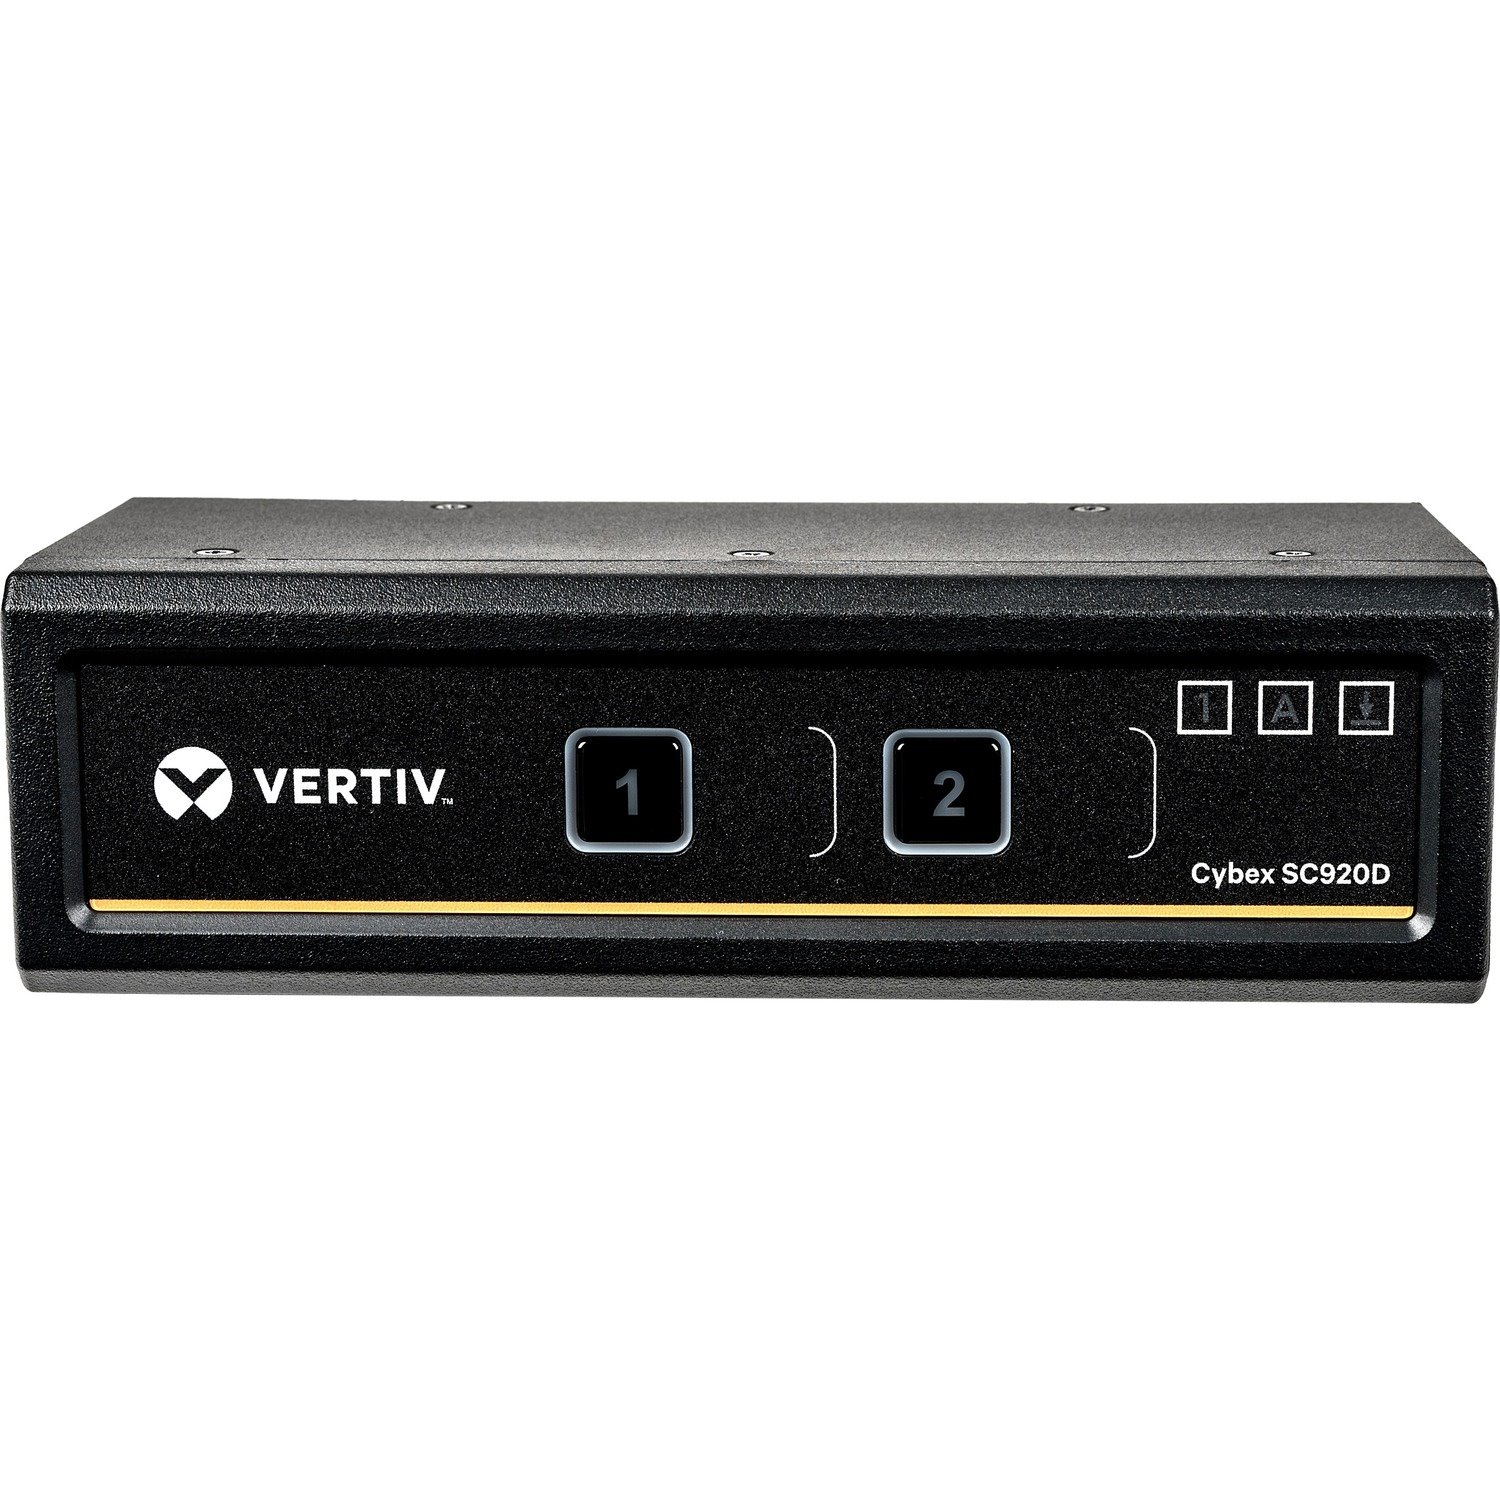 VERTIV Cybex SC920D Secure 2-Port KVM Switch, Dual-Head DisplayPort